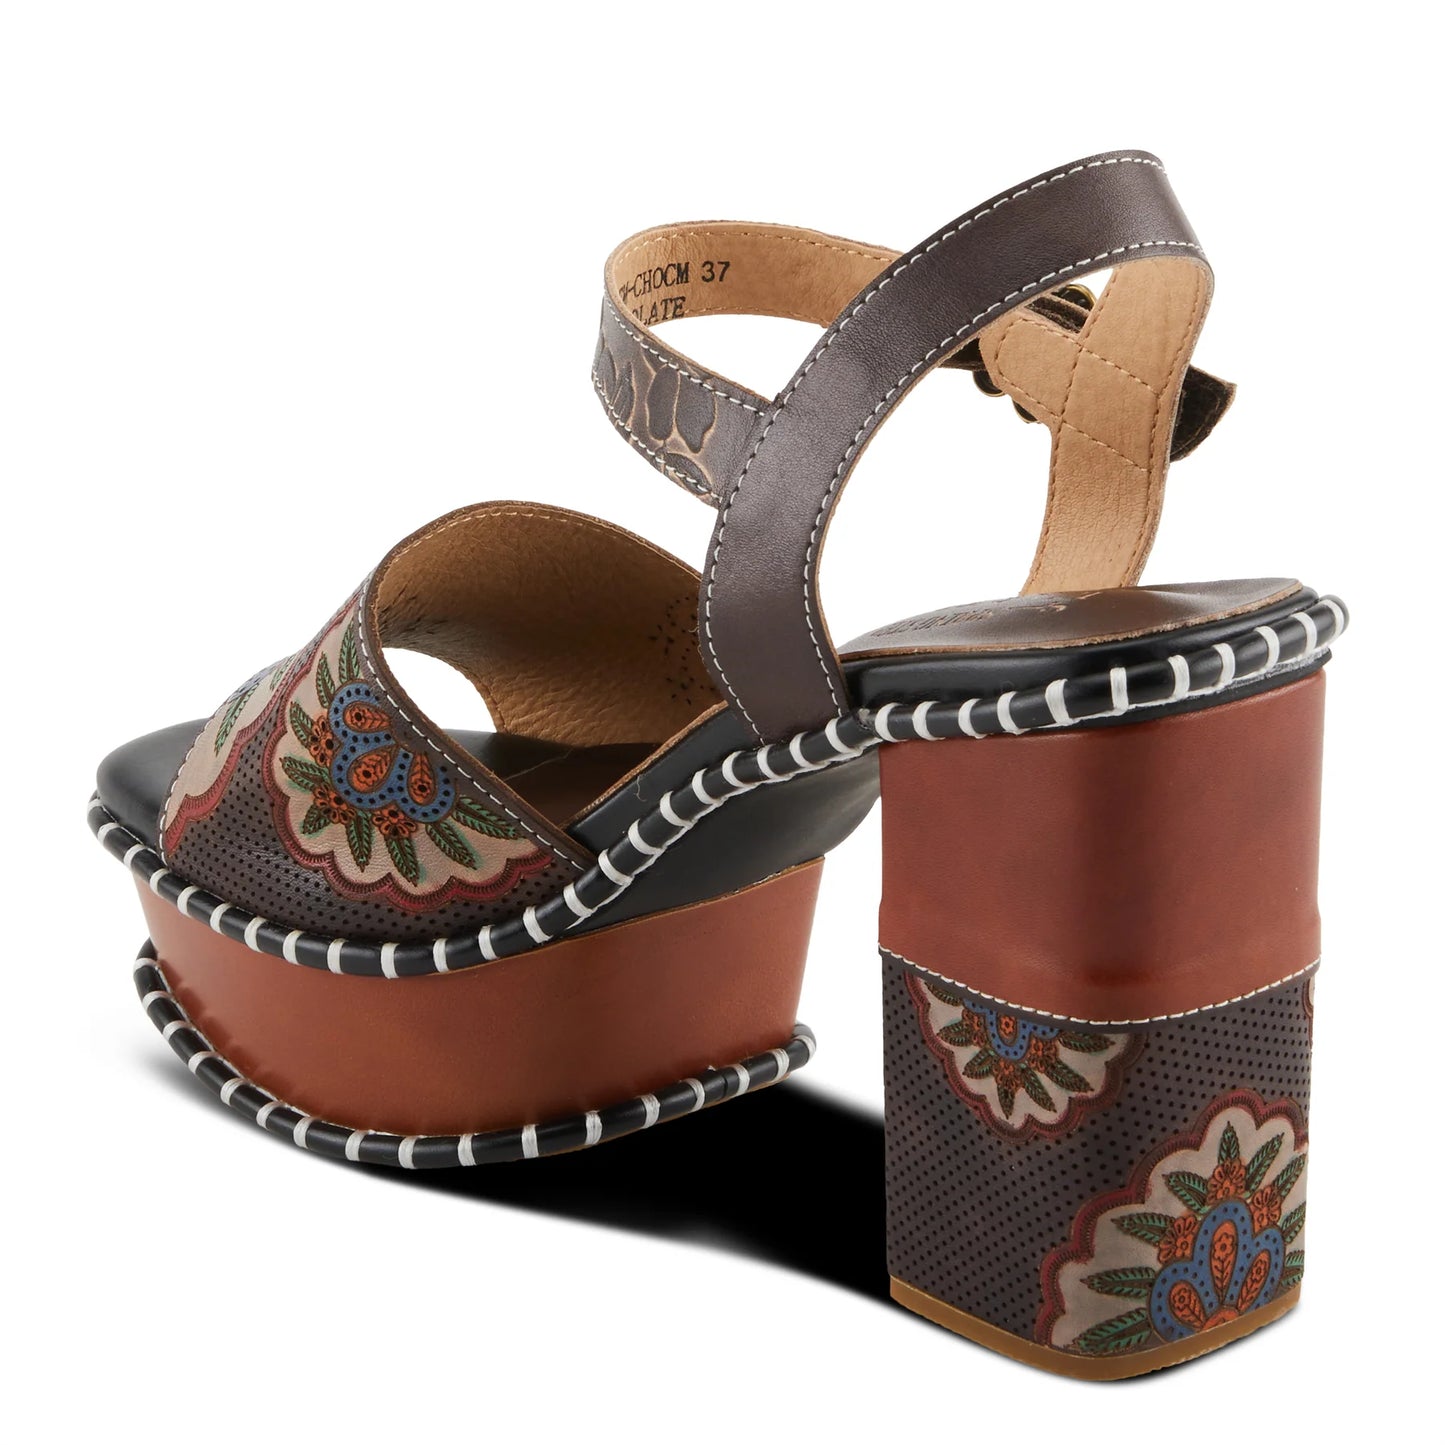 L'Artiste by Spring Step Women's L'Artiste Go Get Em Sandals - Chocolate Multi